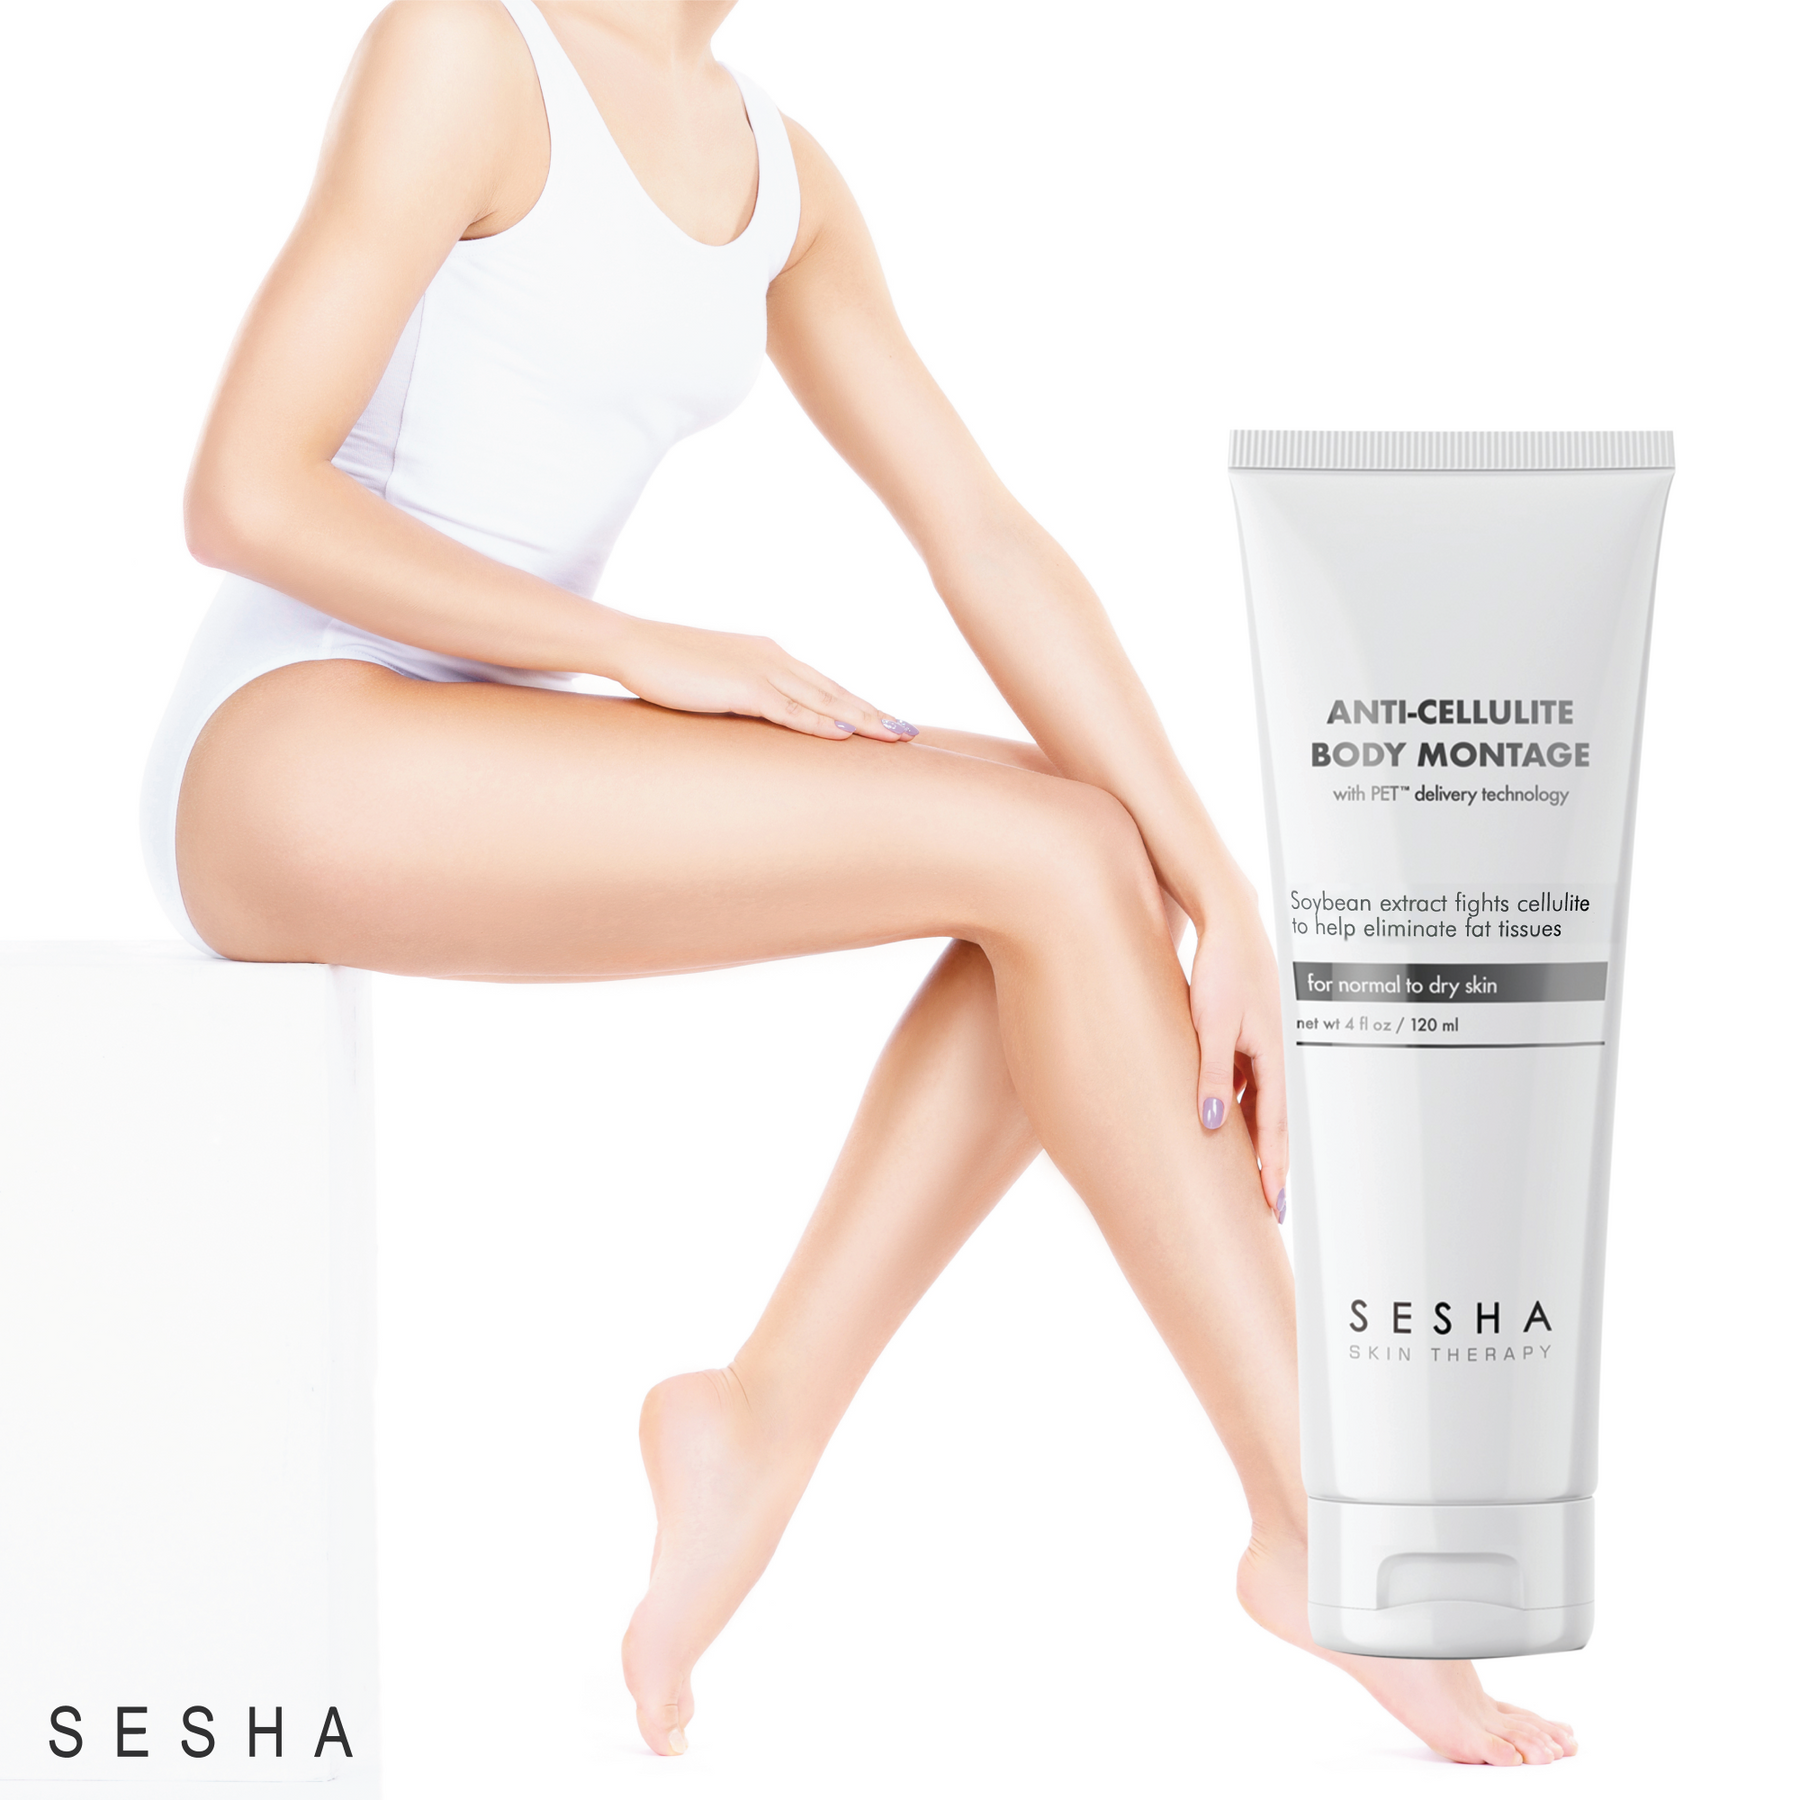 Shop Anti-Cellulite Body Montage online - Sesha Skin Therapy